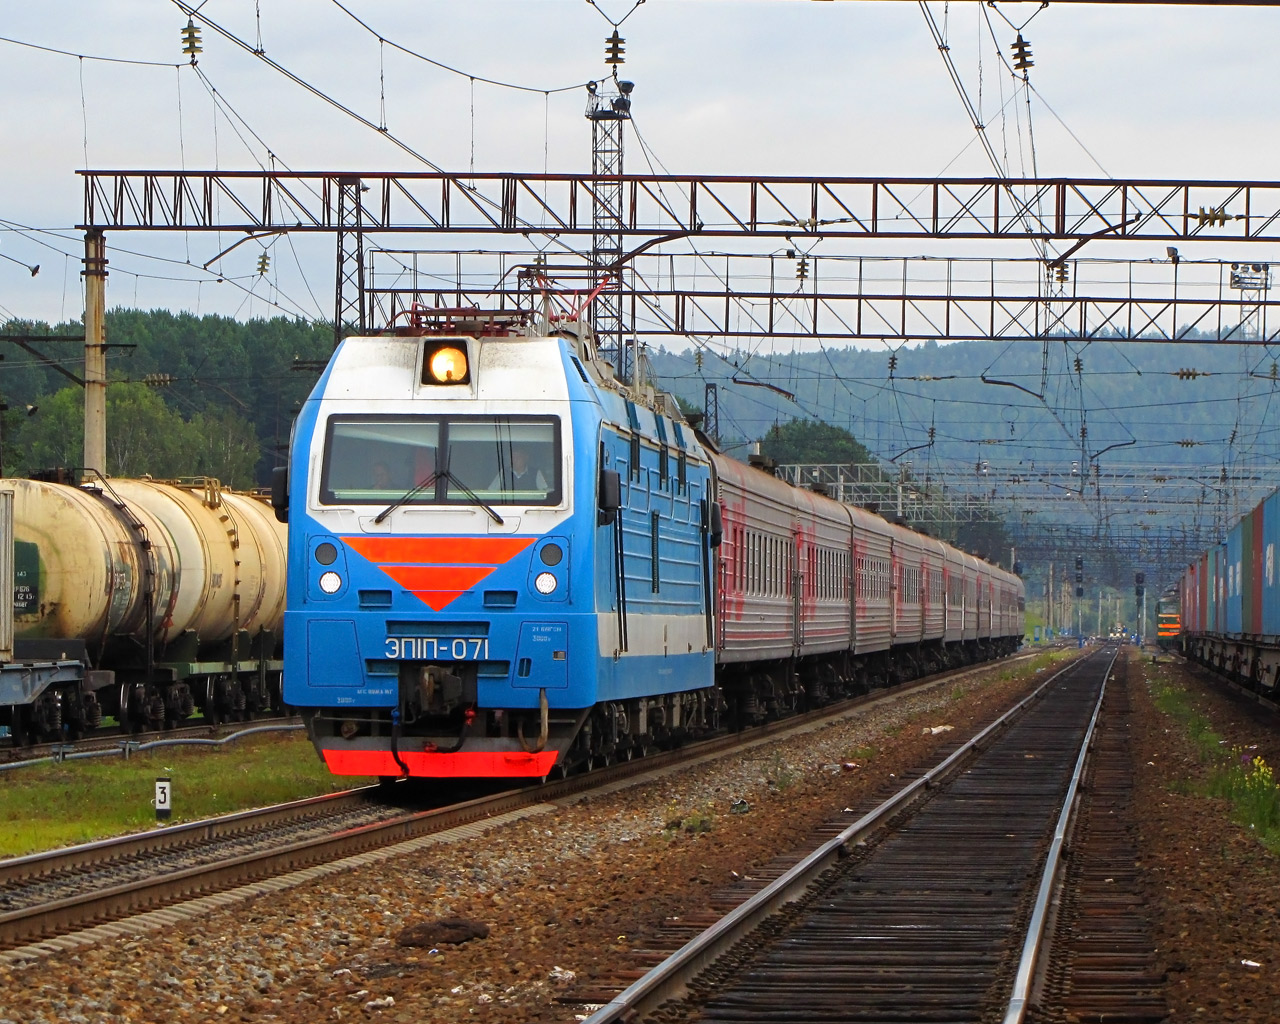 П 71 5. Эп1п-007. Эп1м 545. Эп1 288. Train Chita to Moscow photo.